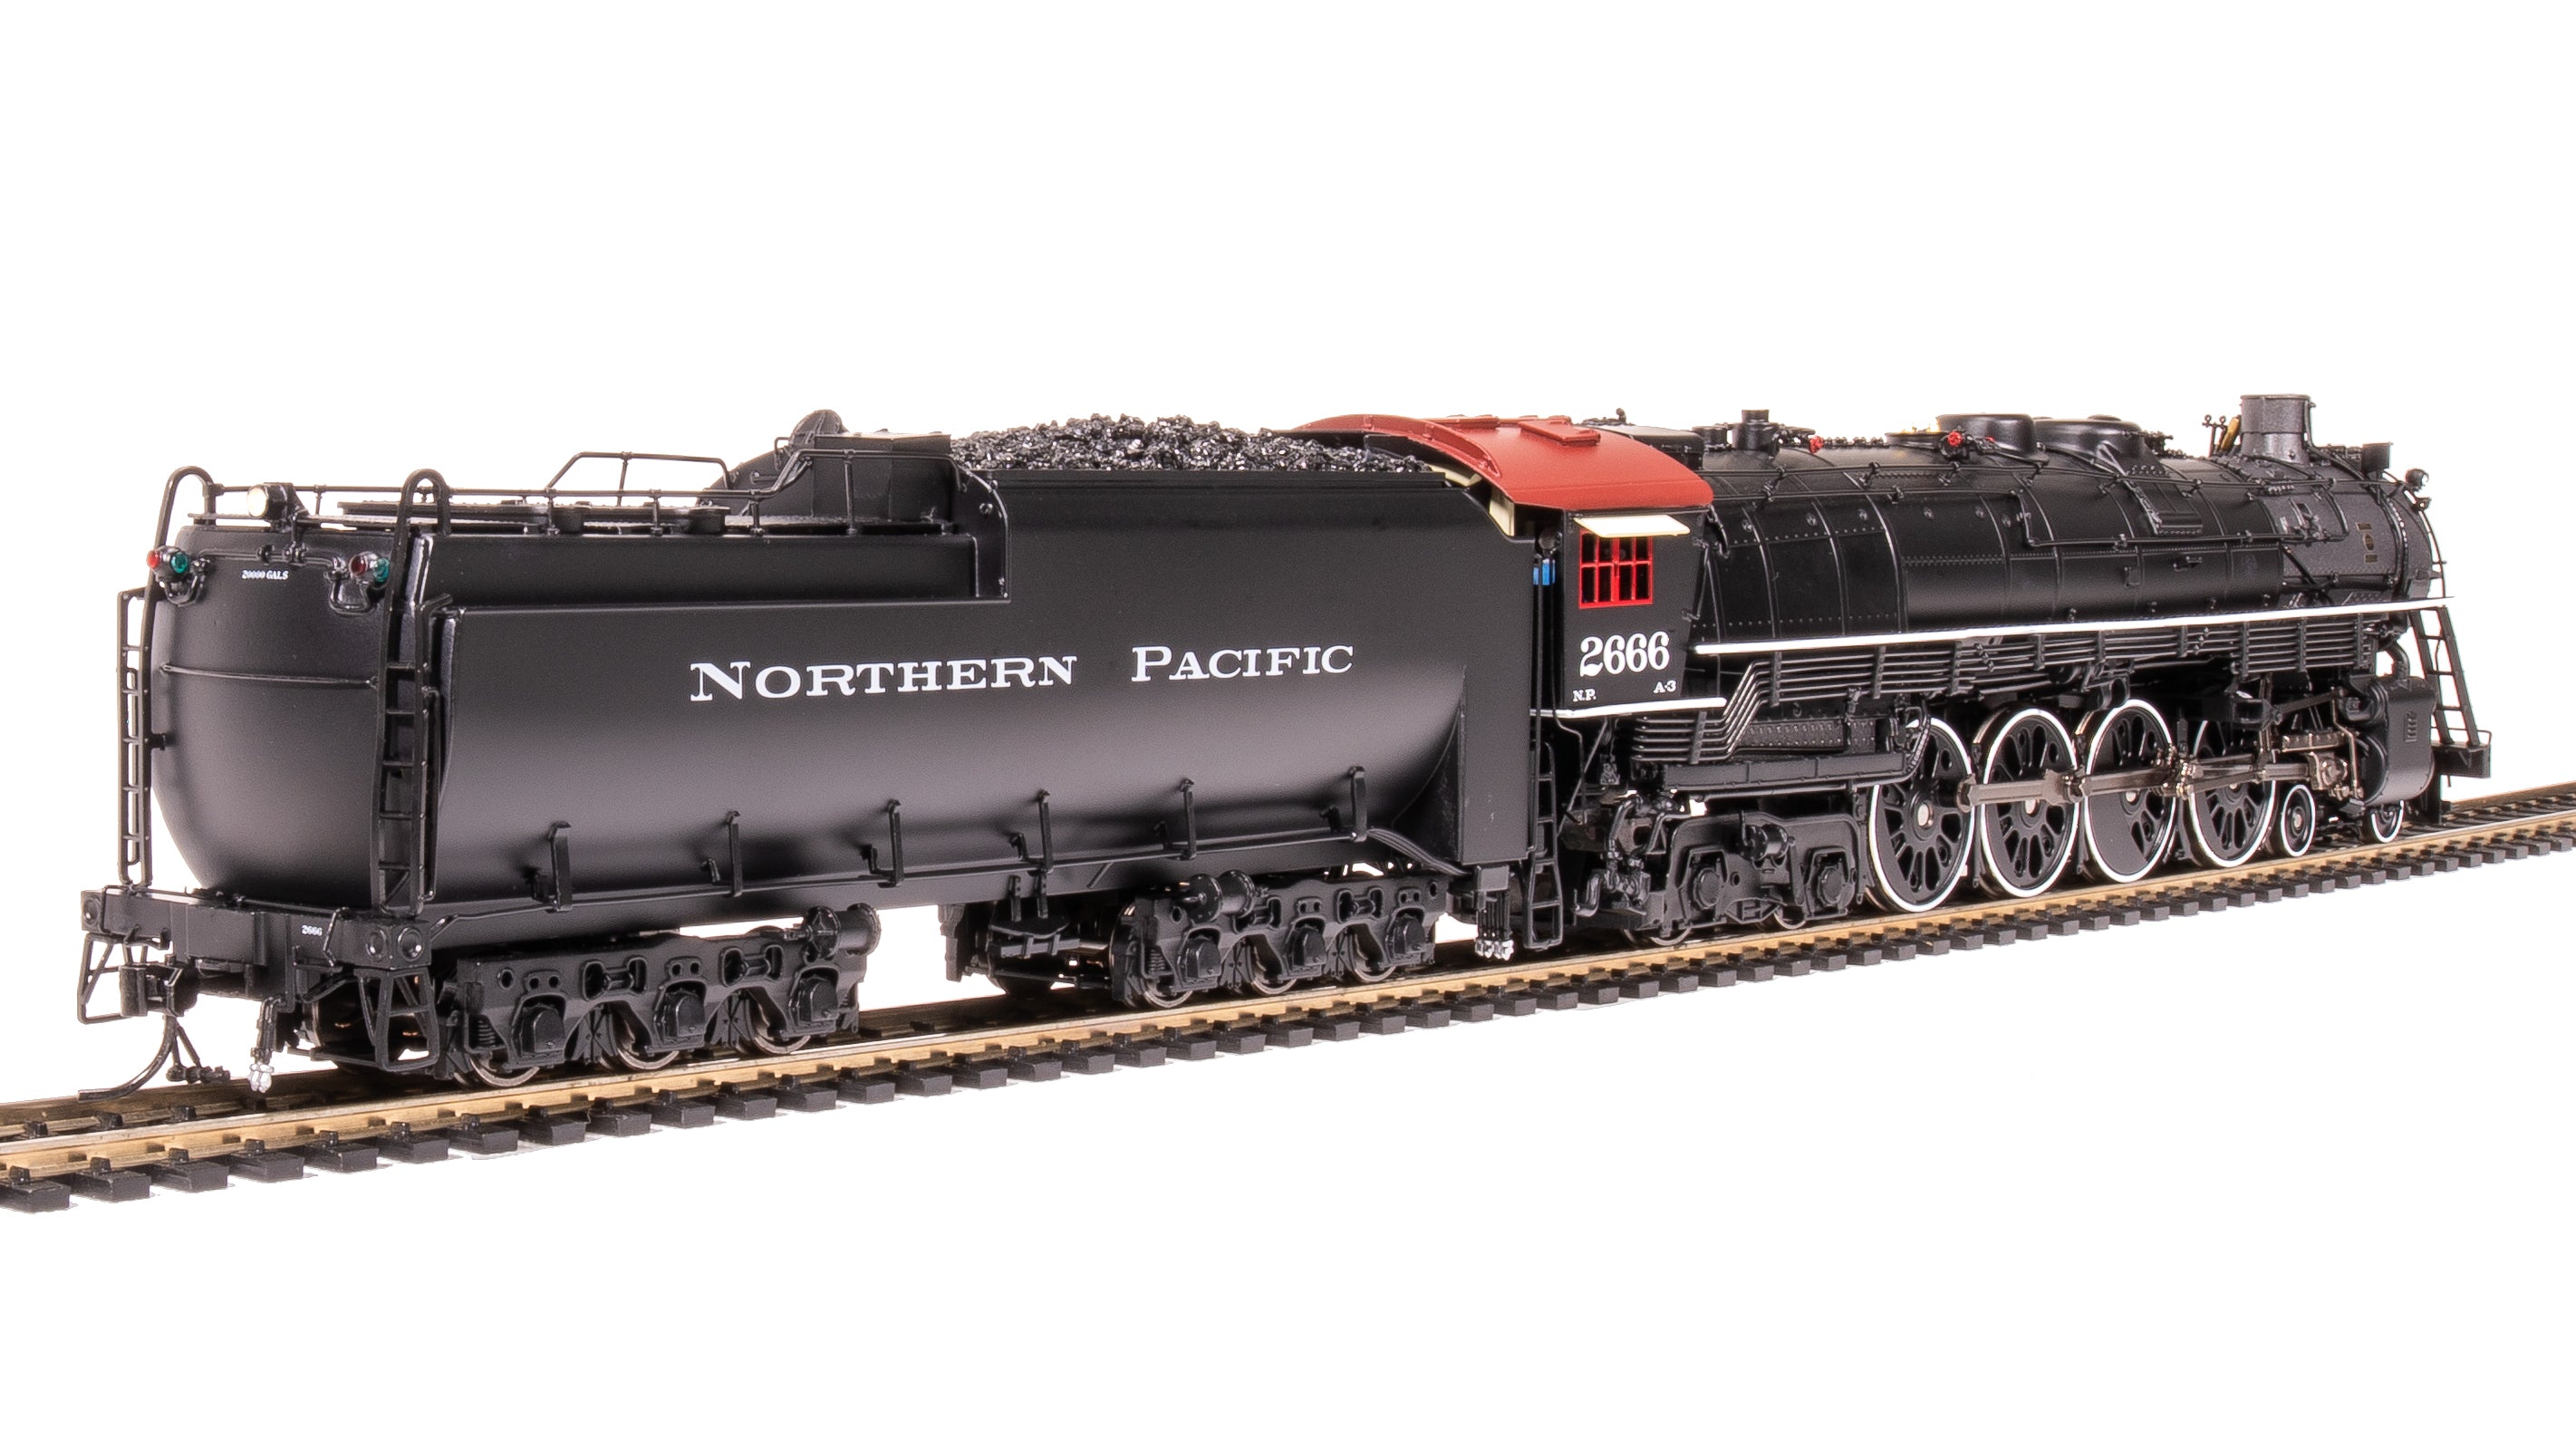 6963 Northern Pacific A-3 4-8-4, #2666, Post-1947, Black Boiler, Paragon4 Sound/DC/DCC, Smoke, HO Default Title